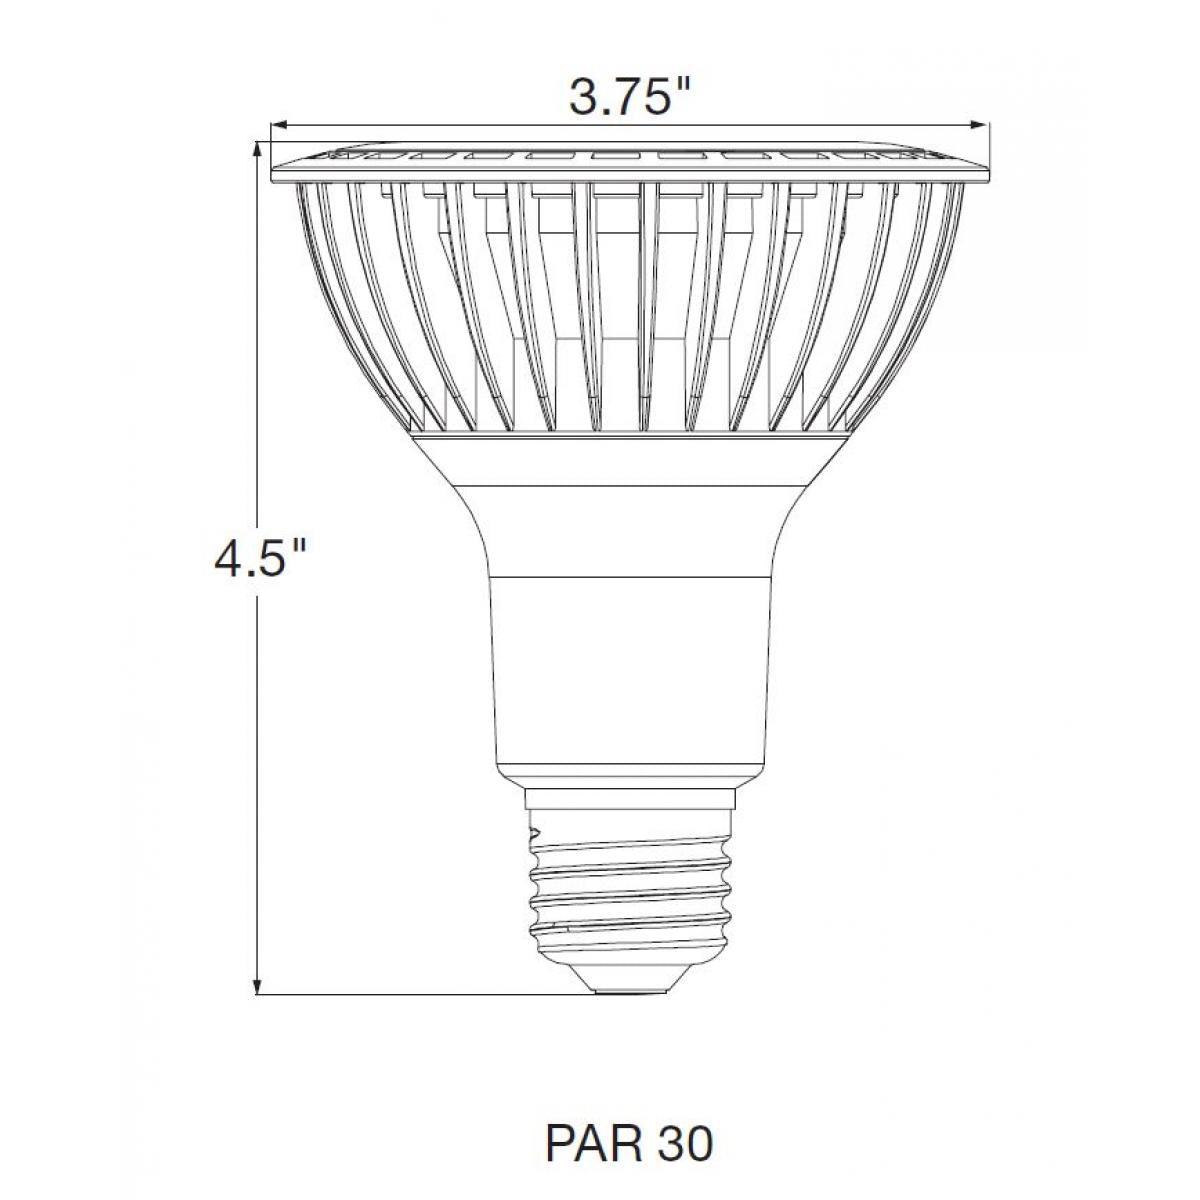 PAR30 Long Neck Reflector LED Bulb, 21 watt, 1800 Lumens, 4000K, E26 Medium Base, 40 Deg. Flood - Bees Lighting